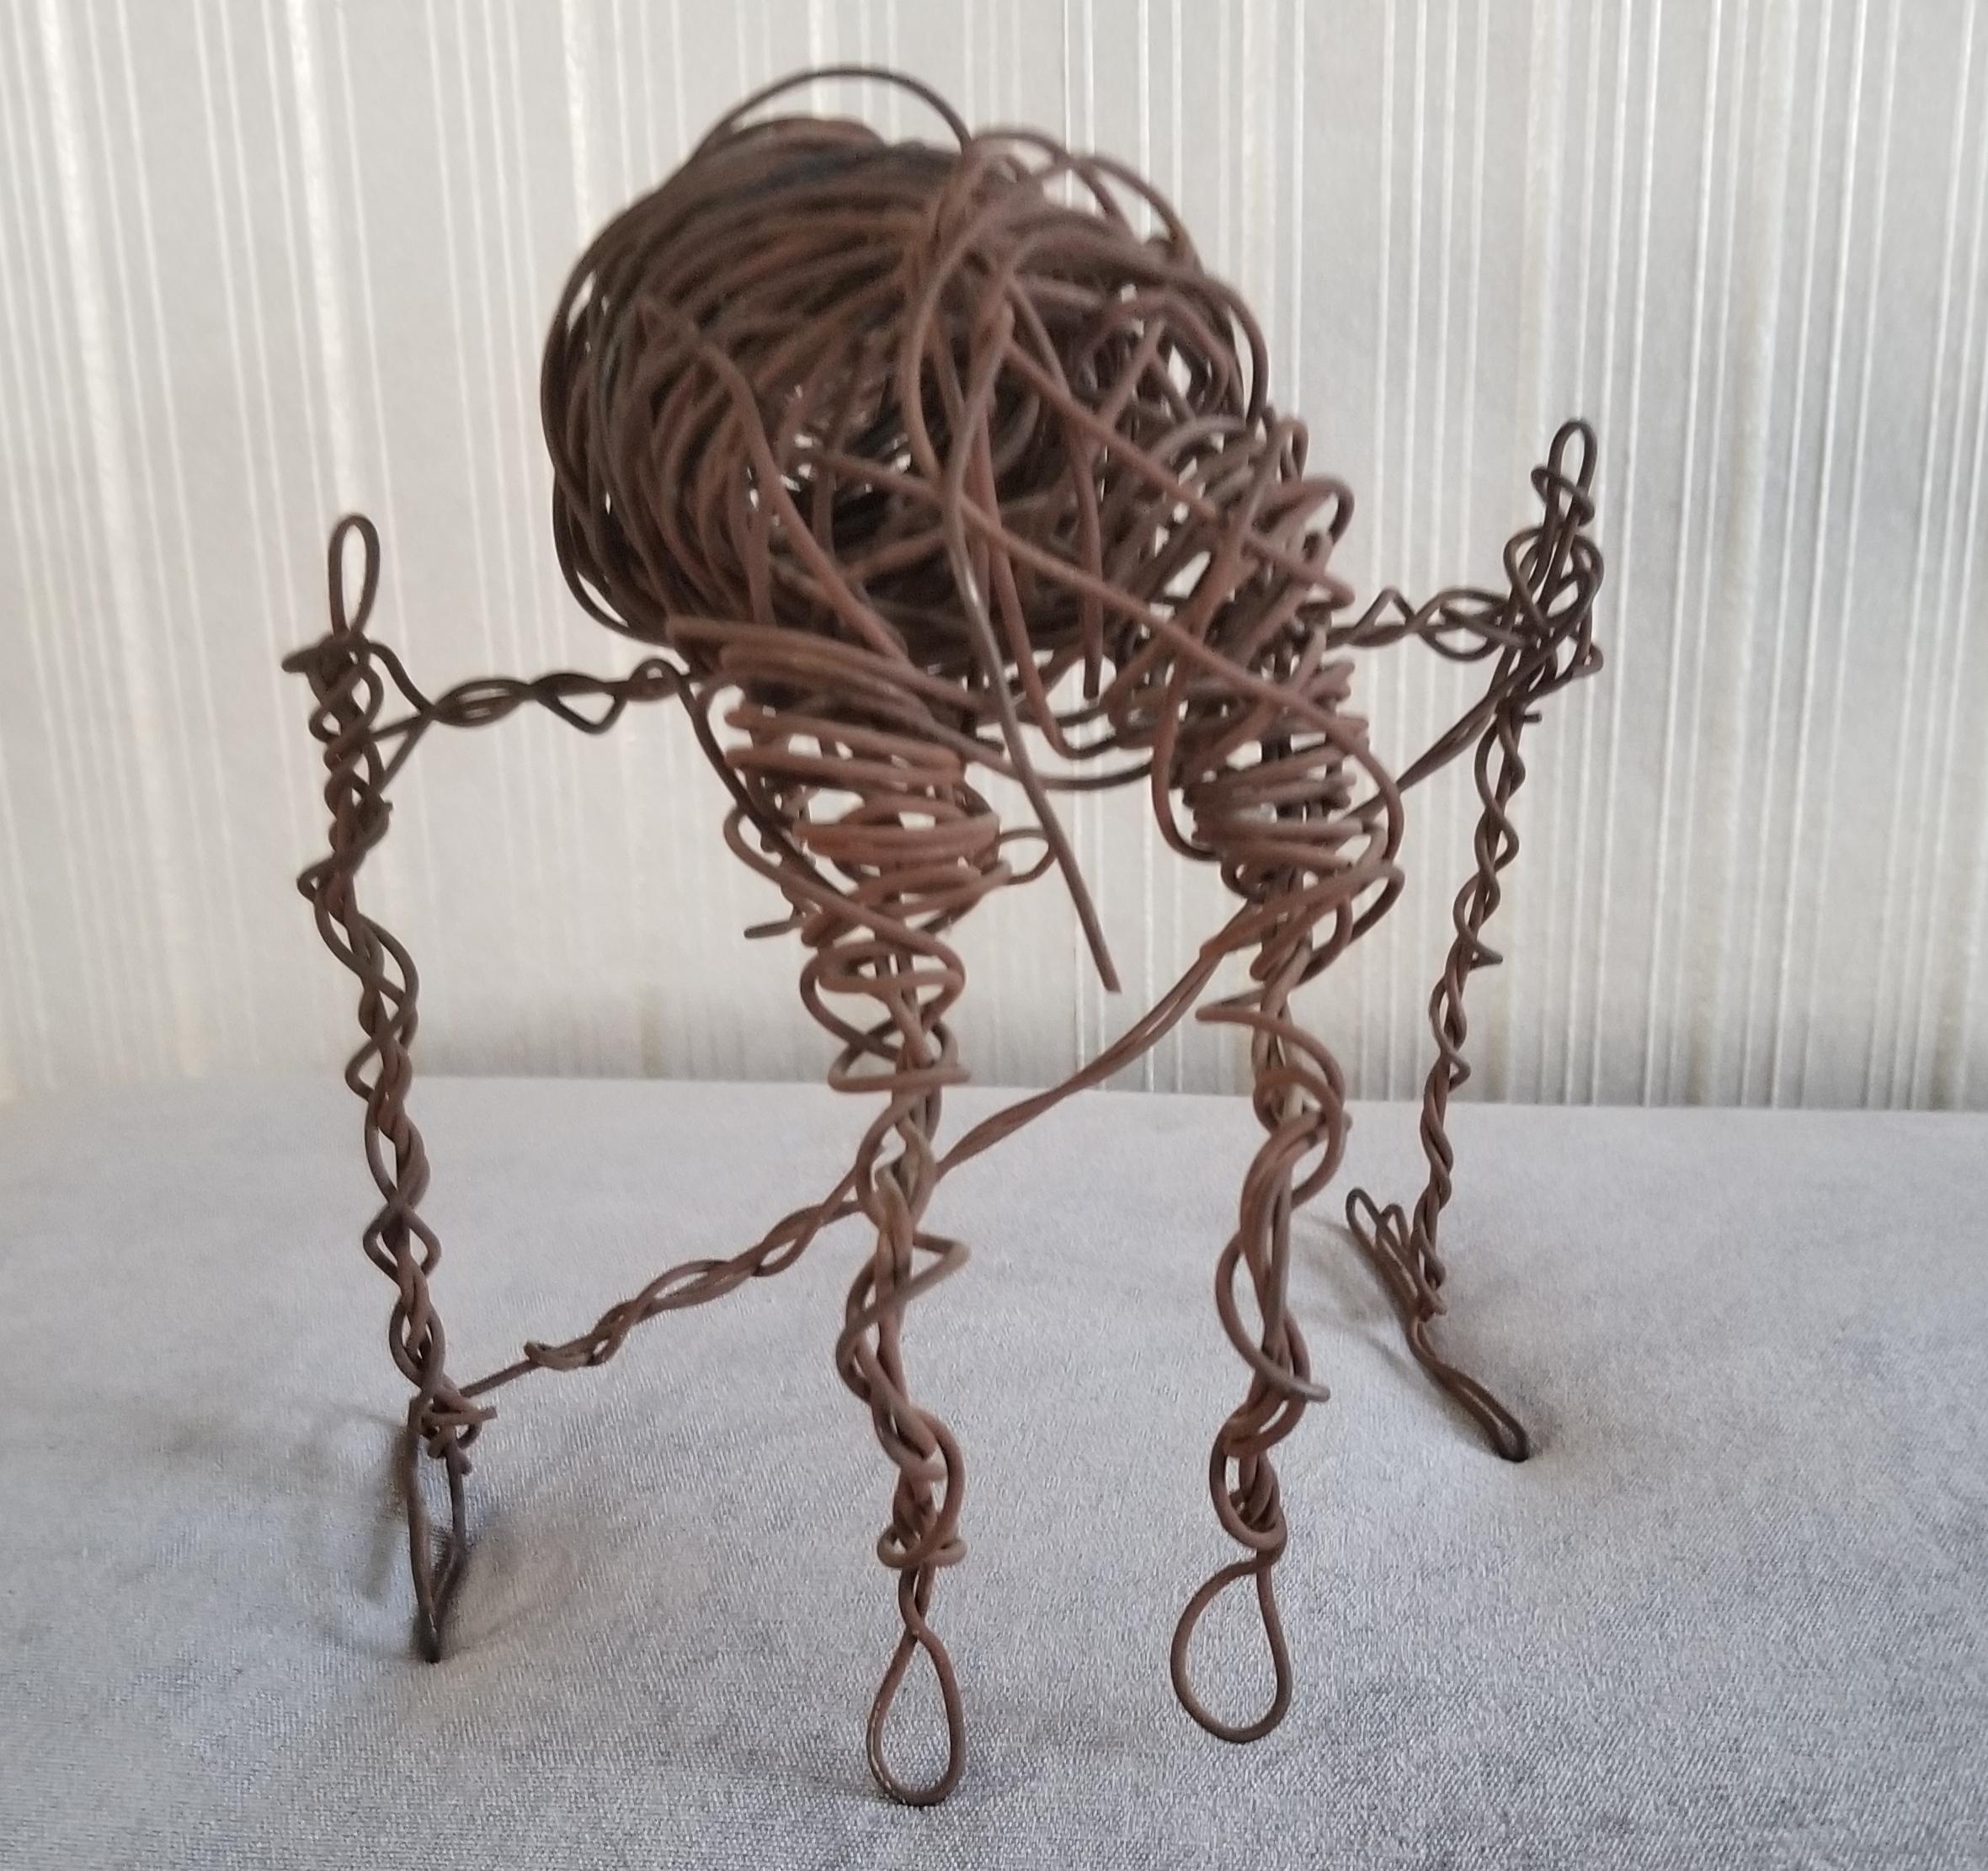 American Brutalist Art Wire Horse Sculpture Modernist Metal Jumper, 1960s